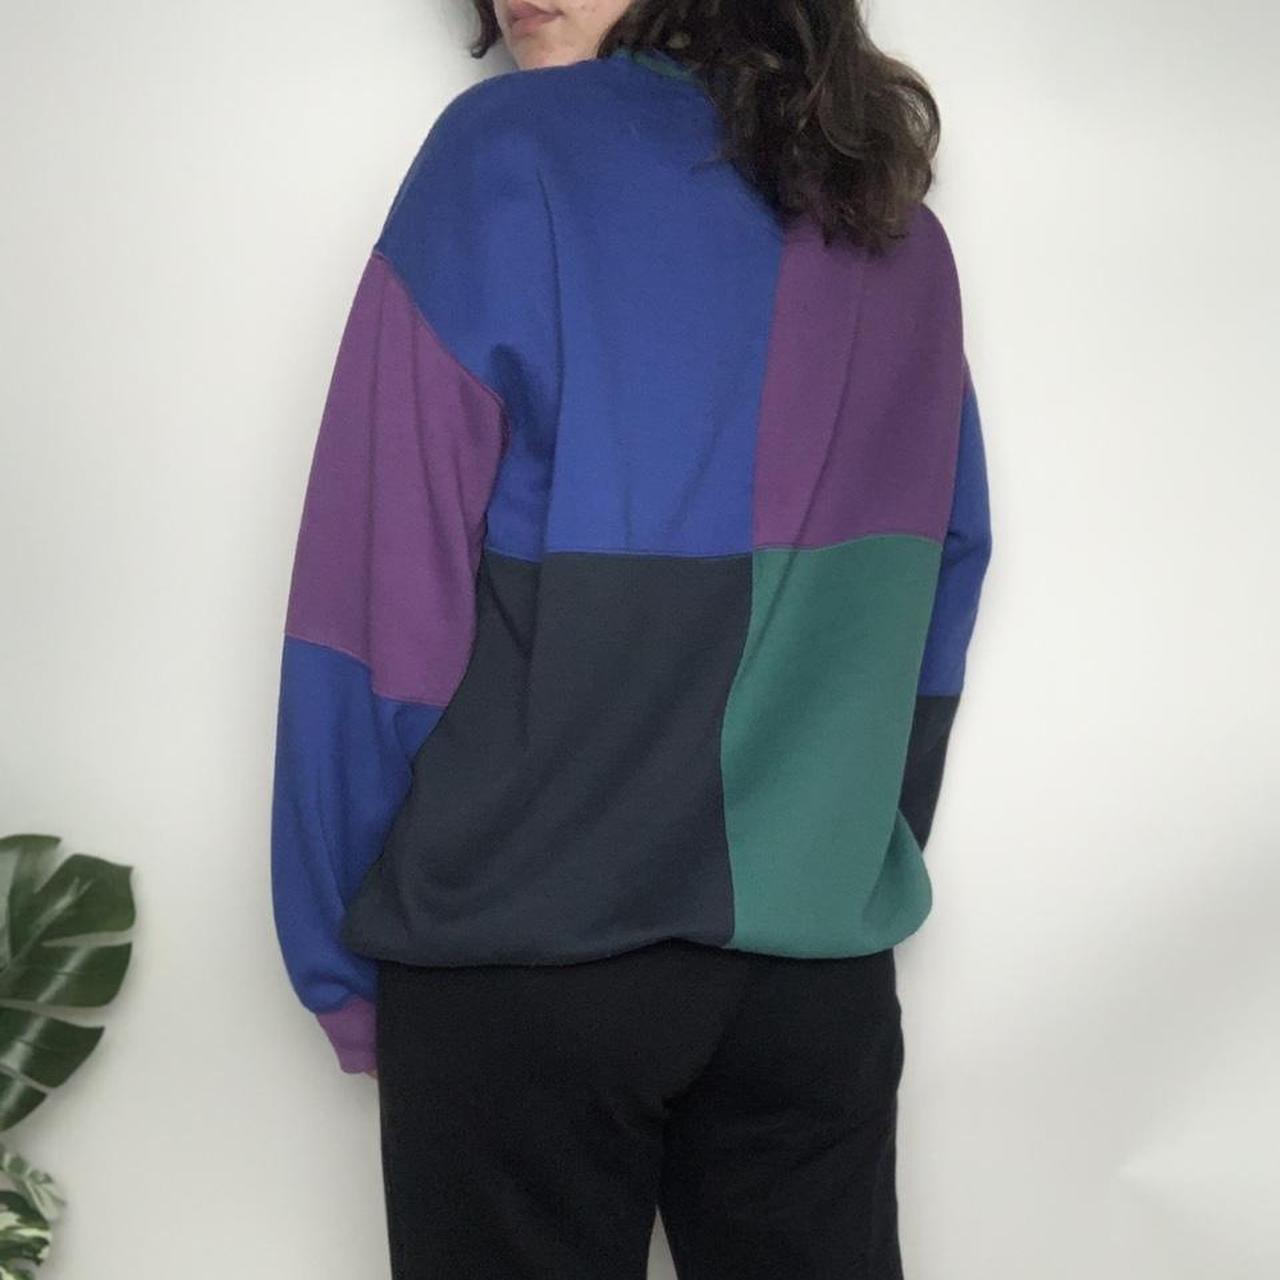 Vintage 90s Ralph Lauren style reworked colour block sweatshirt